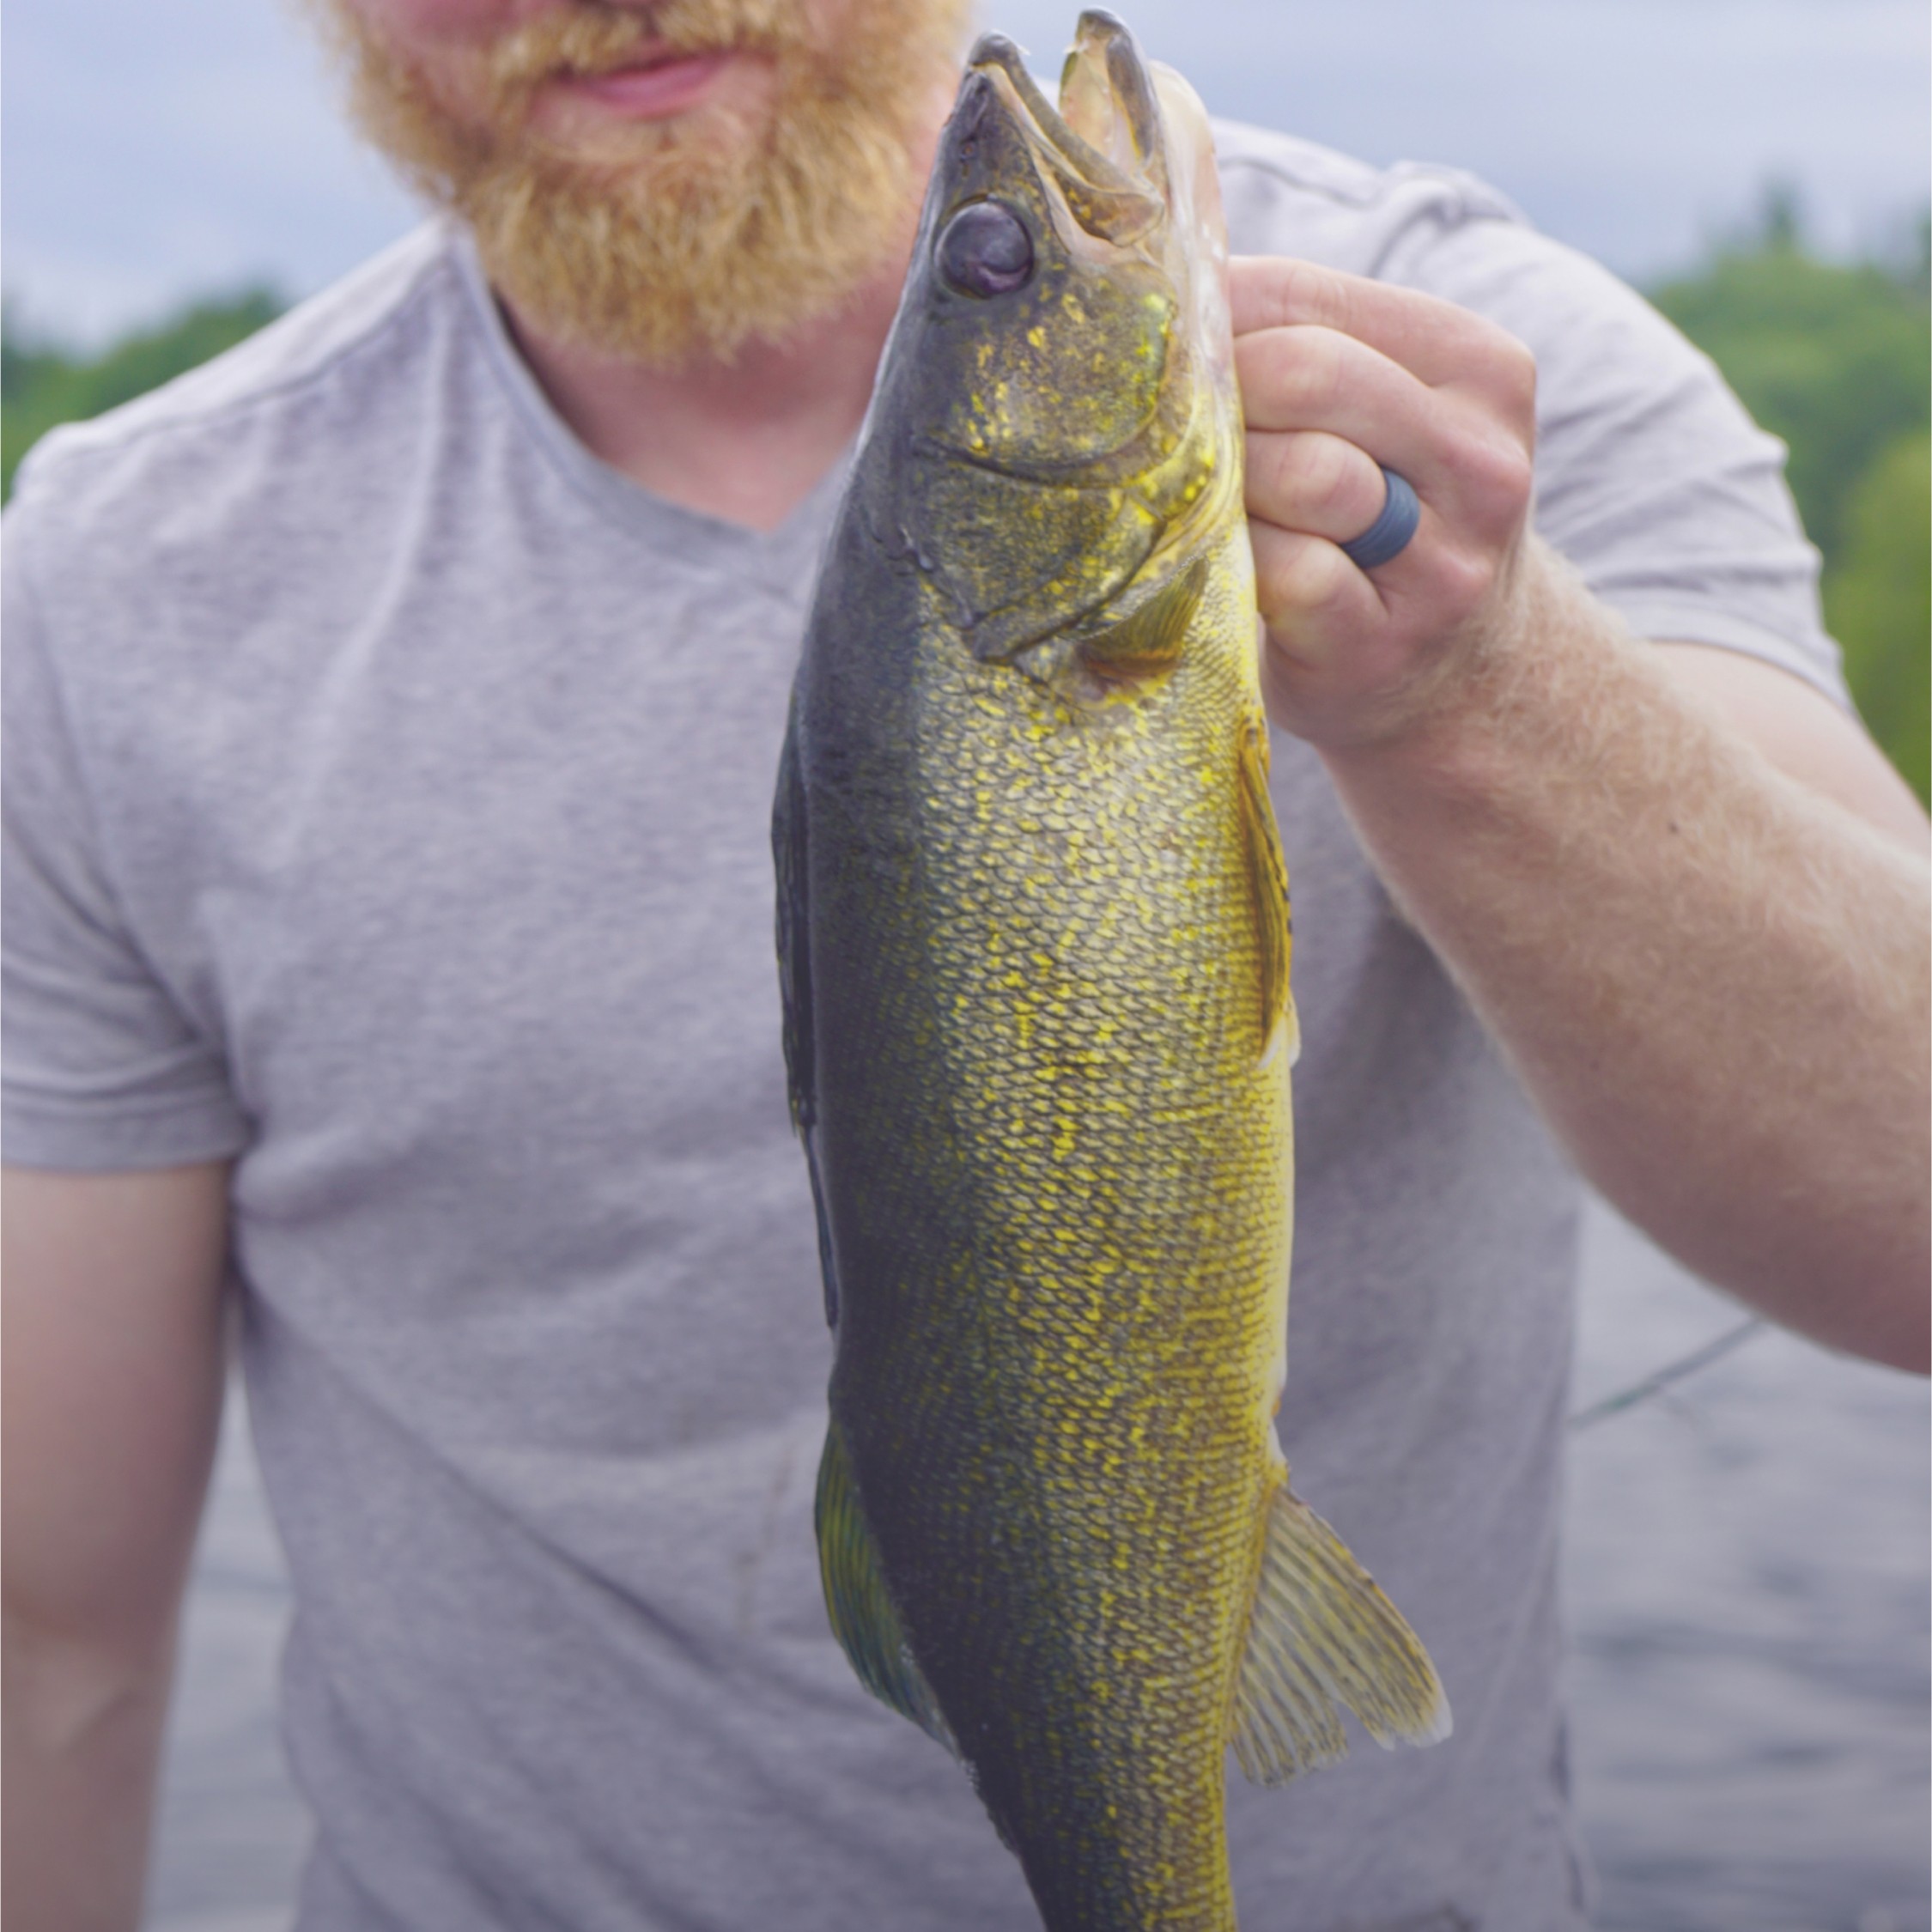 A fisherman holding a salmon